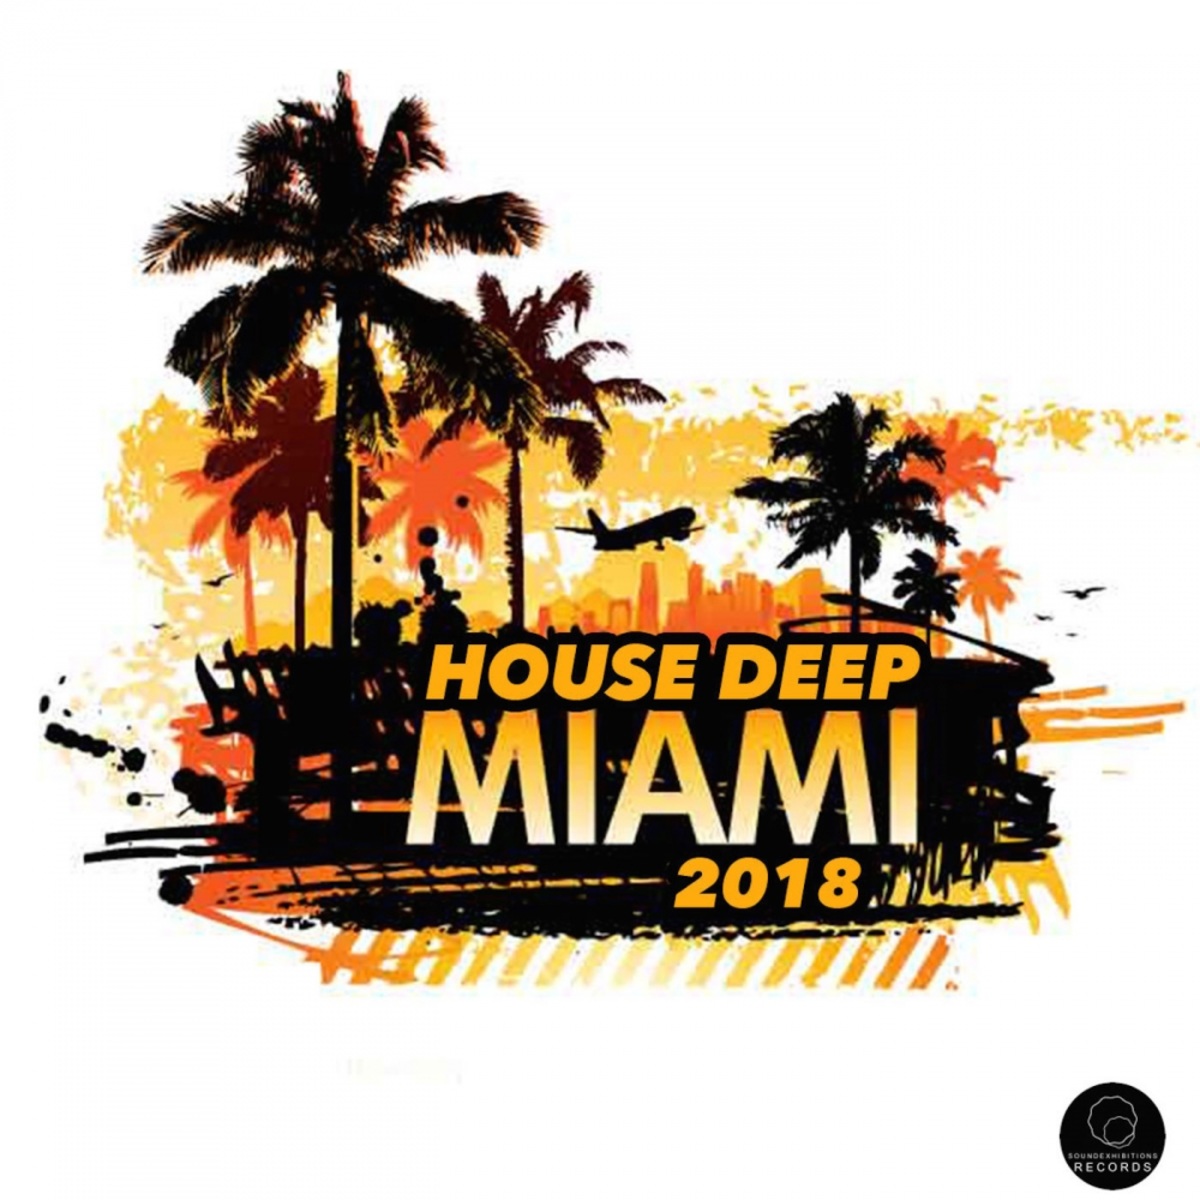 VA - Miami 2018 House Deep / Sound-Exhibitions-Records